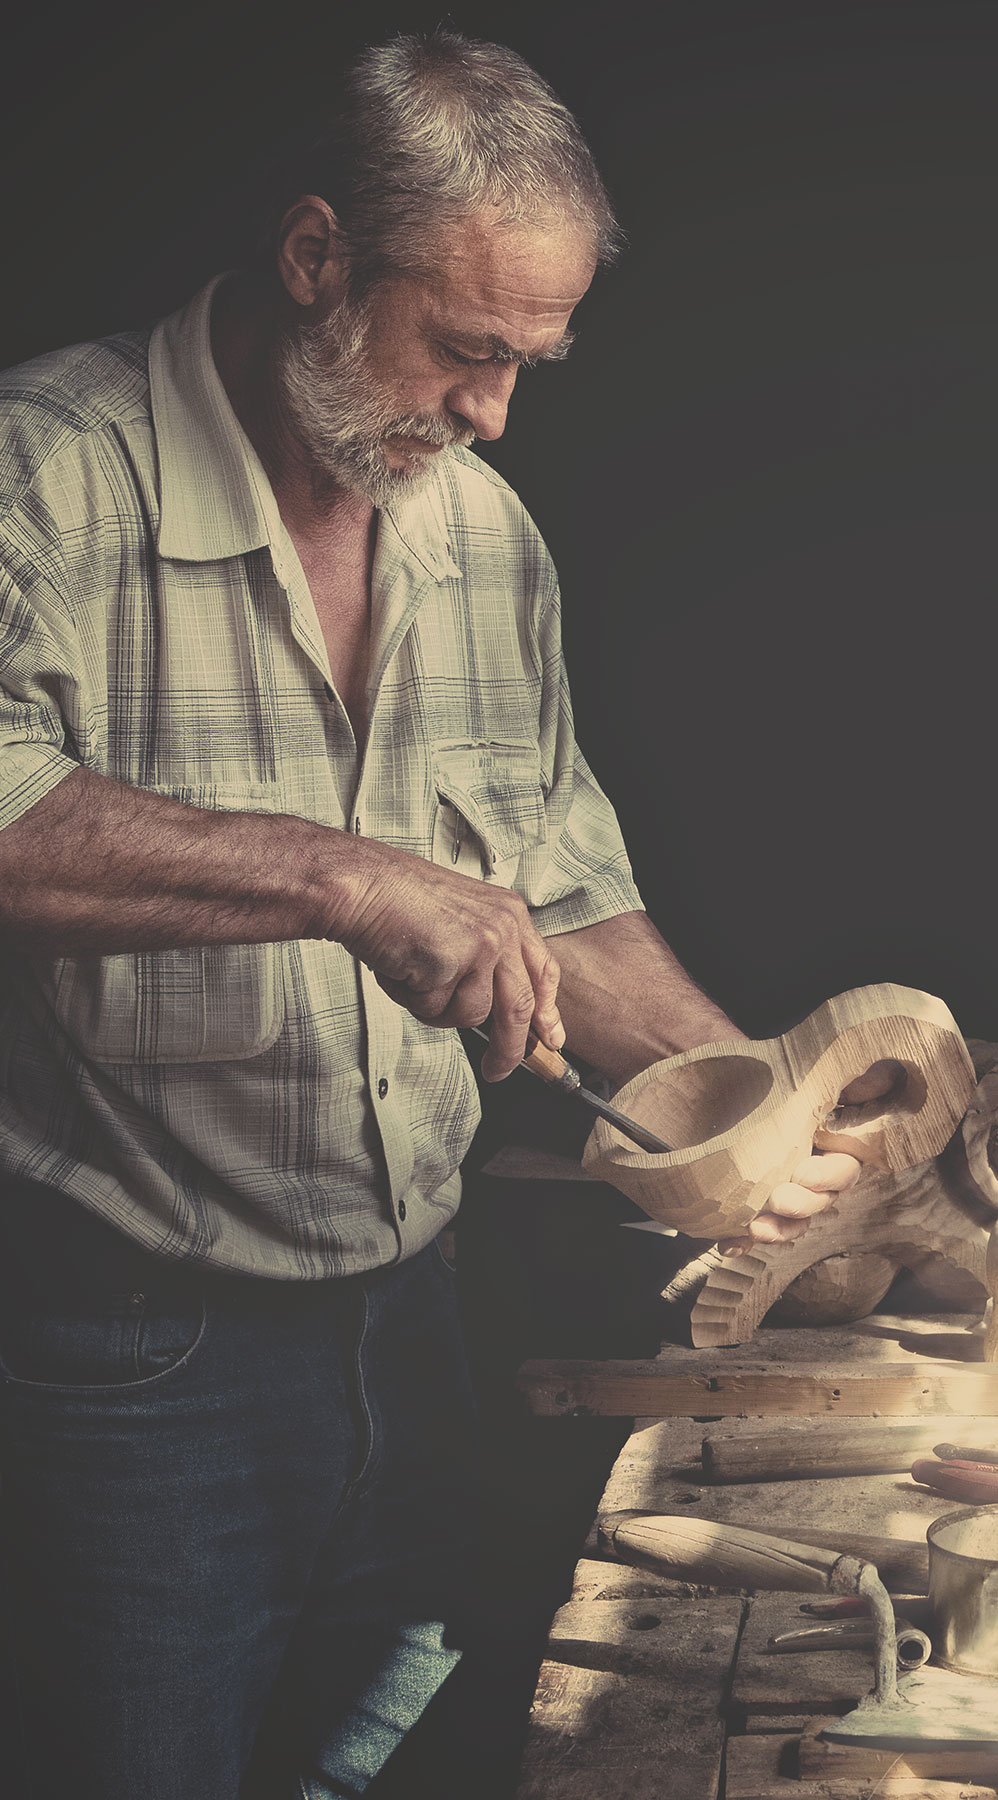 Man carving wood